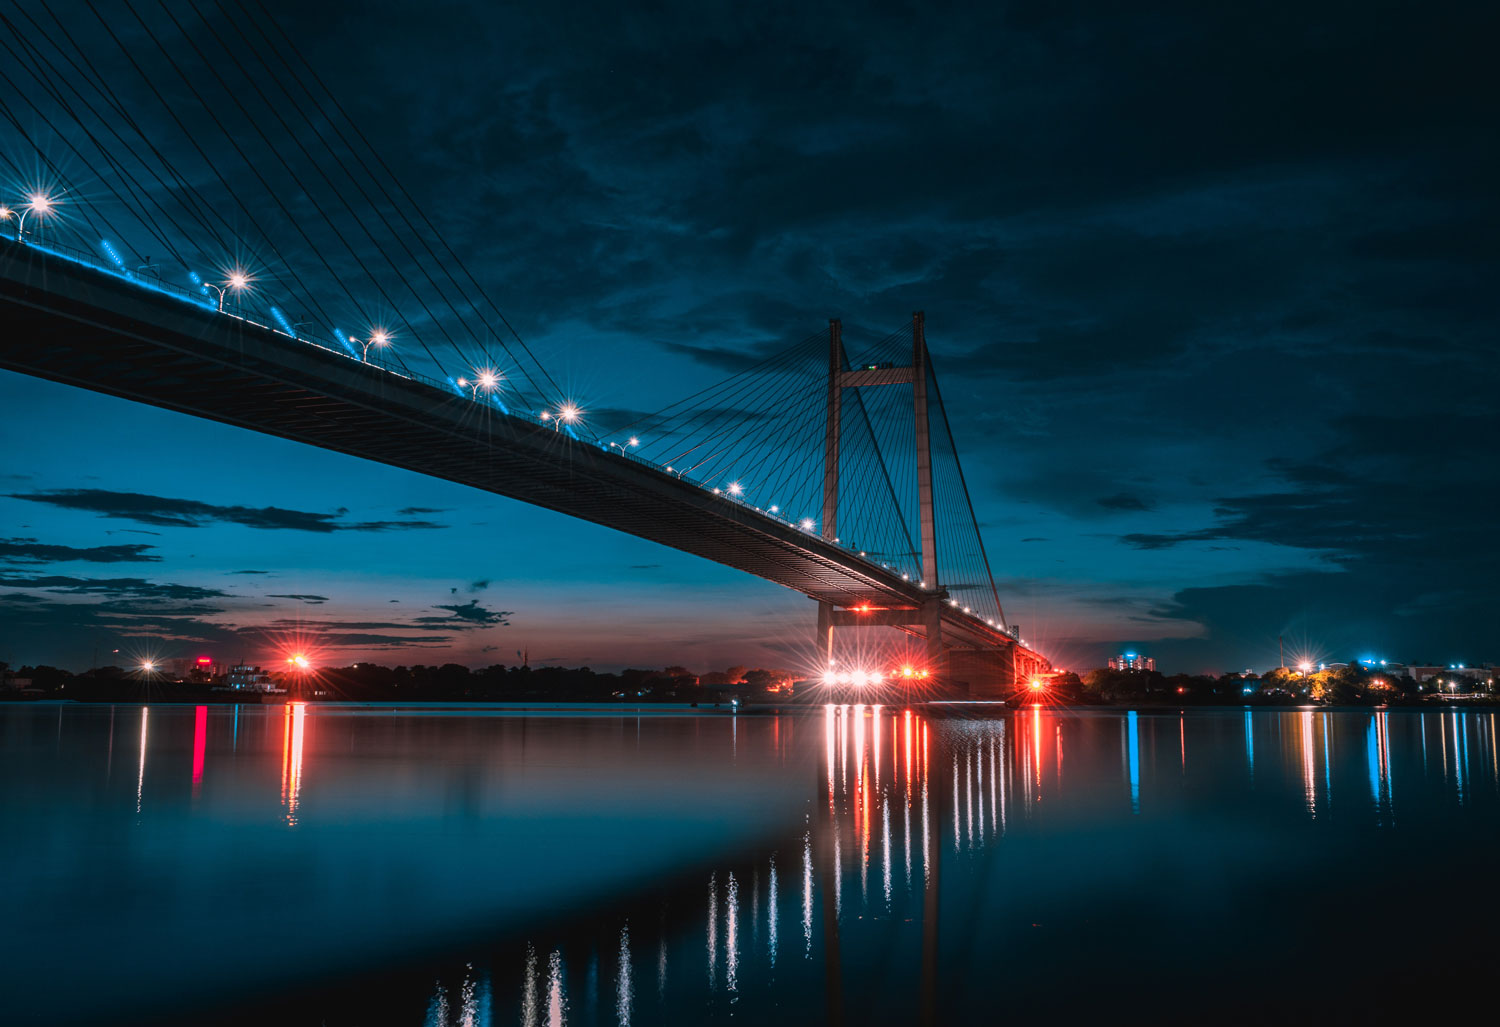 The Hooghly Bridge over the Hooghly River in Kolkata (Calcutta), West Bengal, India